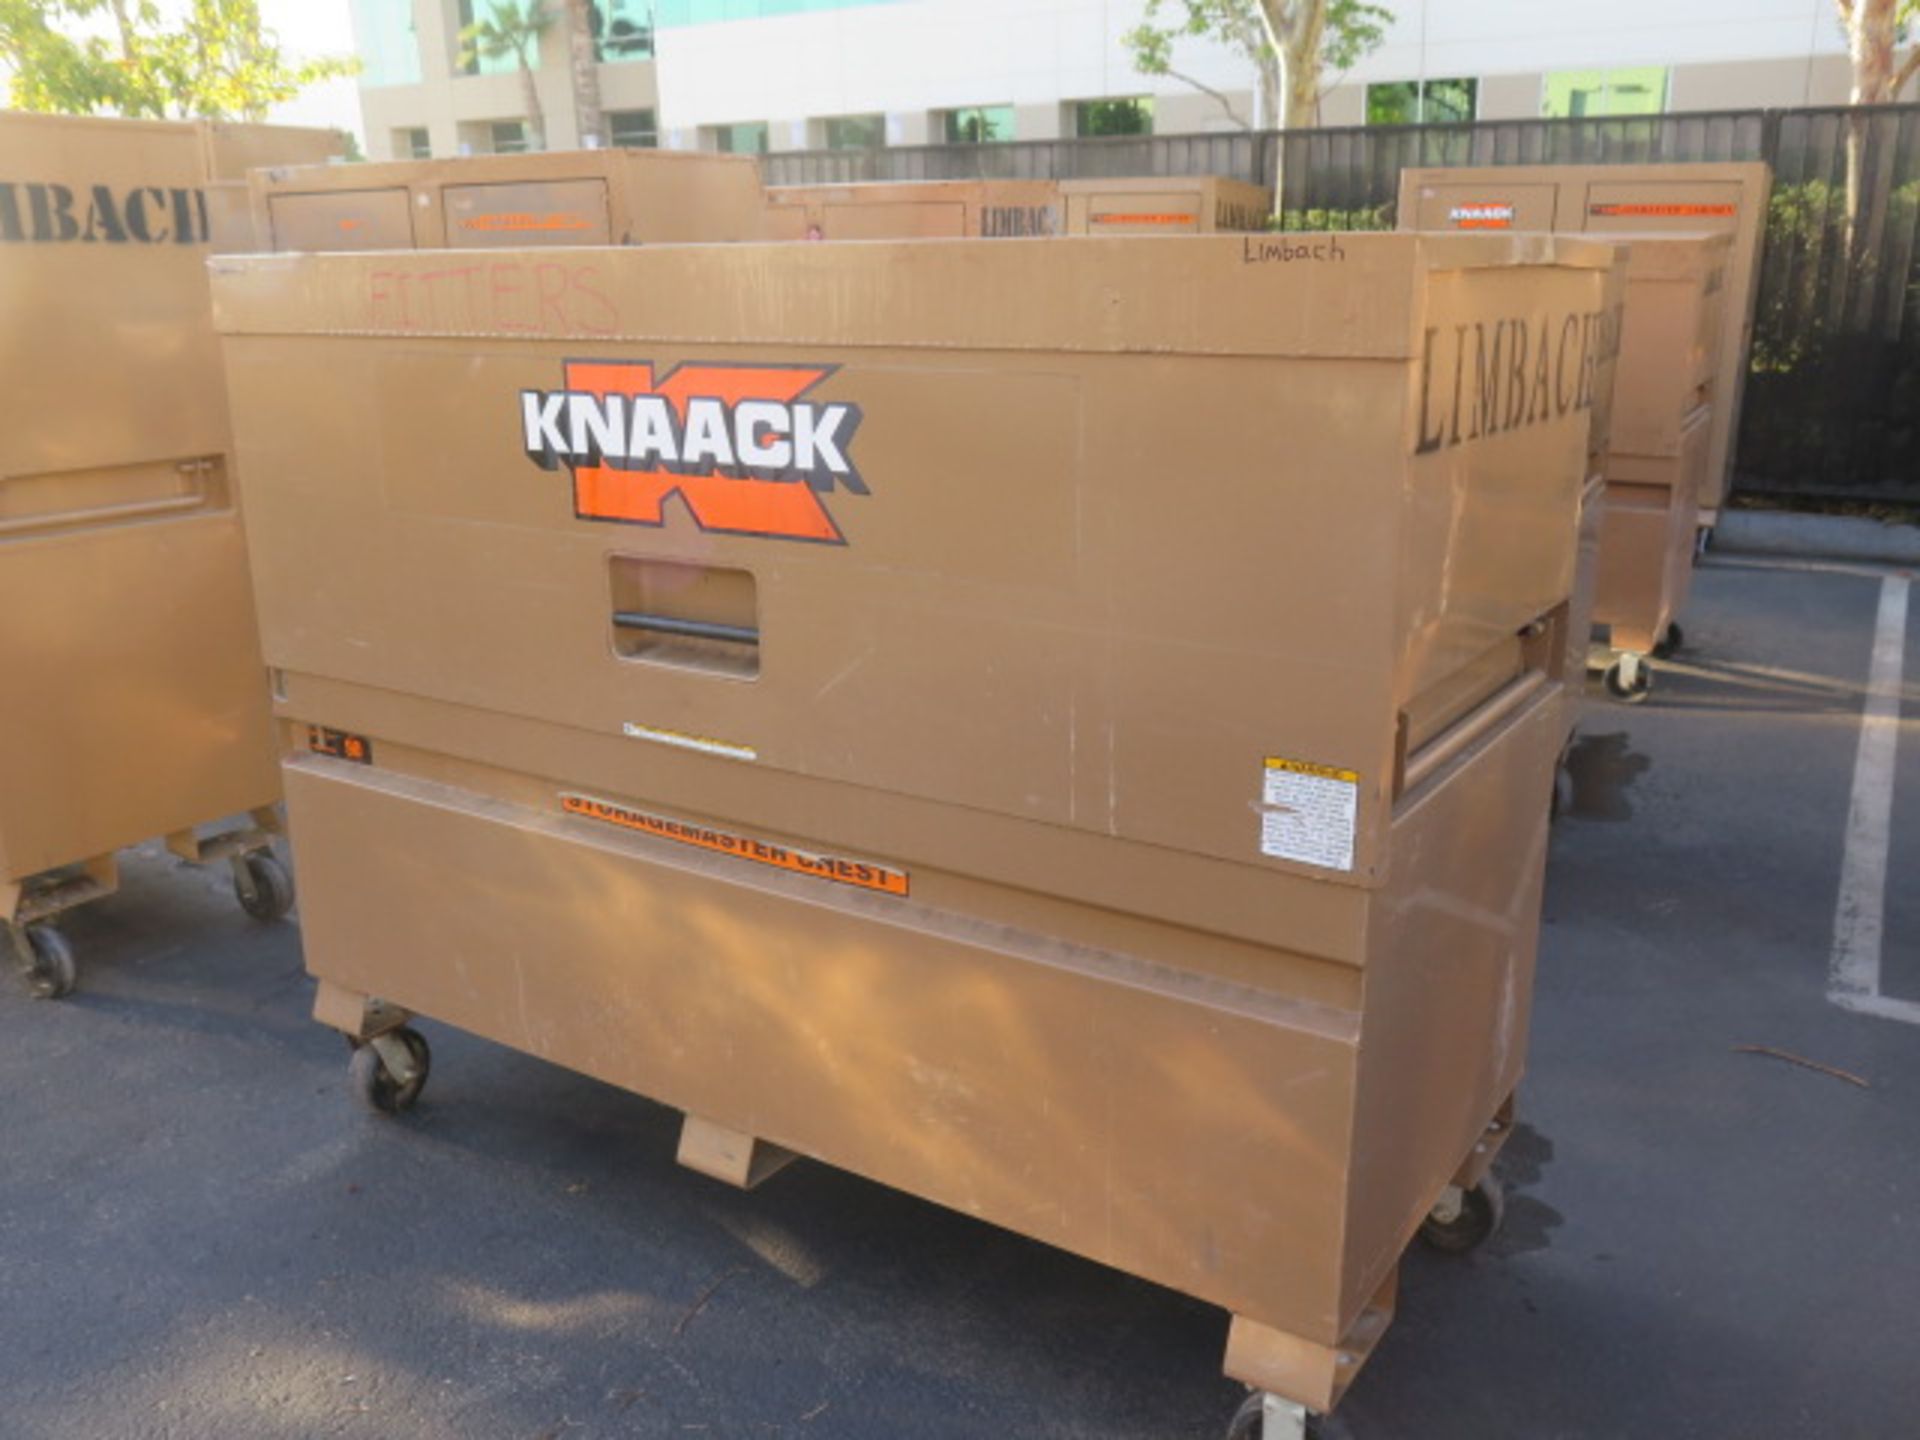 Knaack mdl. 90 Storagemaster Rolling Job Box (SOLD AS-IS - NO WARRANTY) - Image 2 of 9